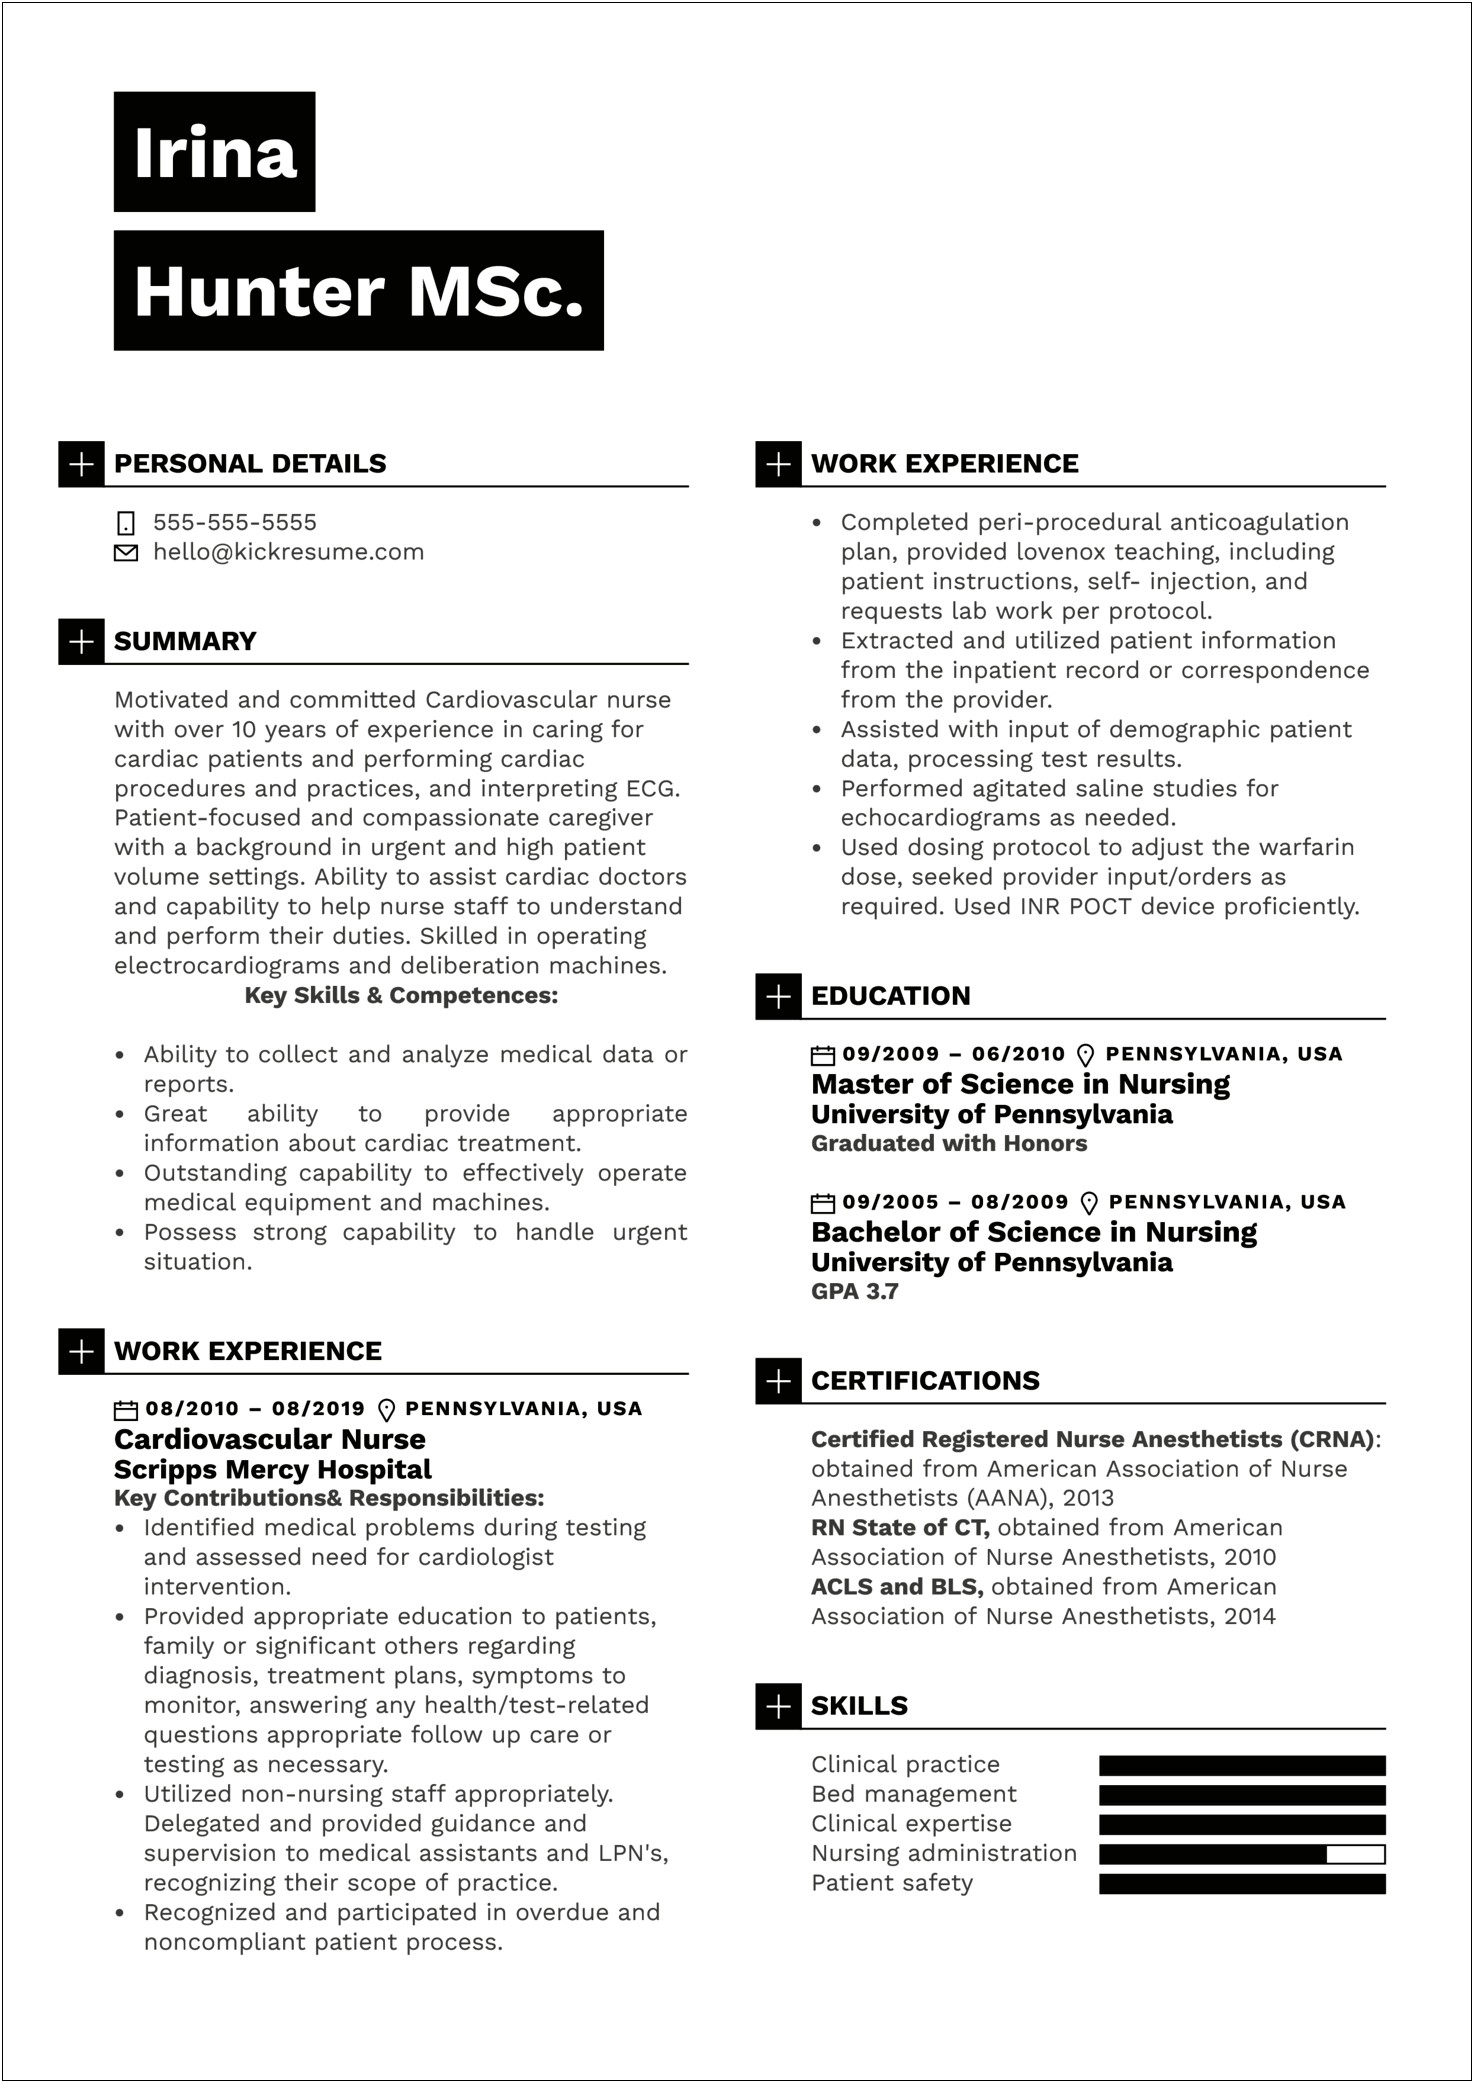 Nursing Skills And Qualifications On Resume